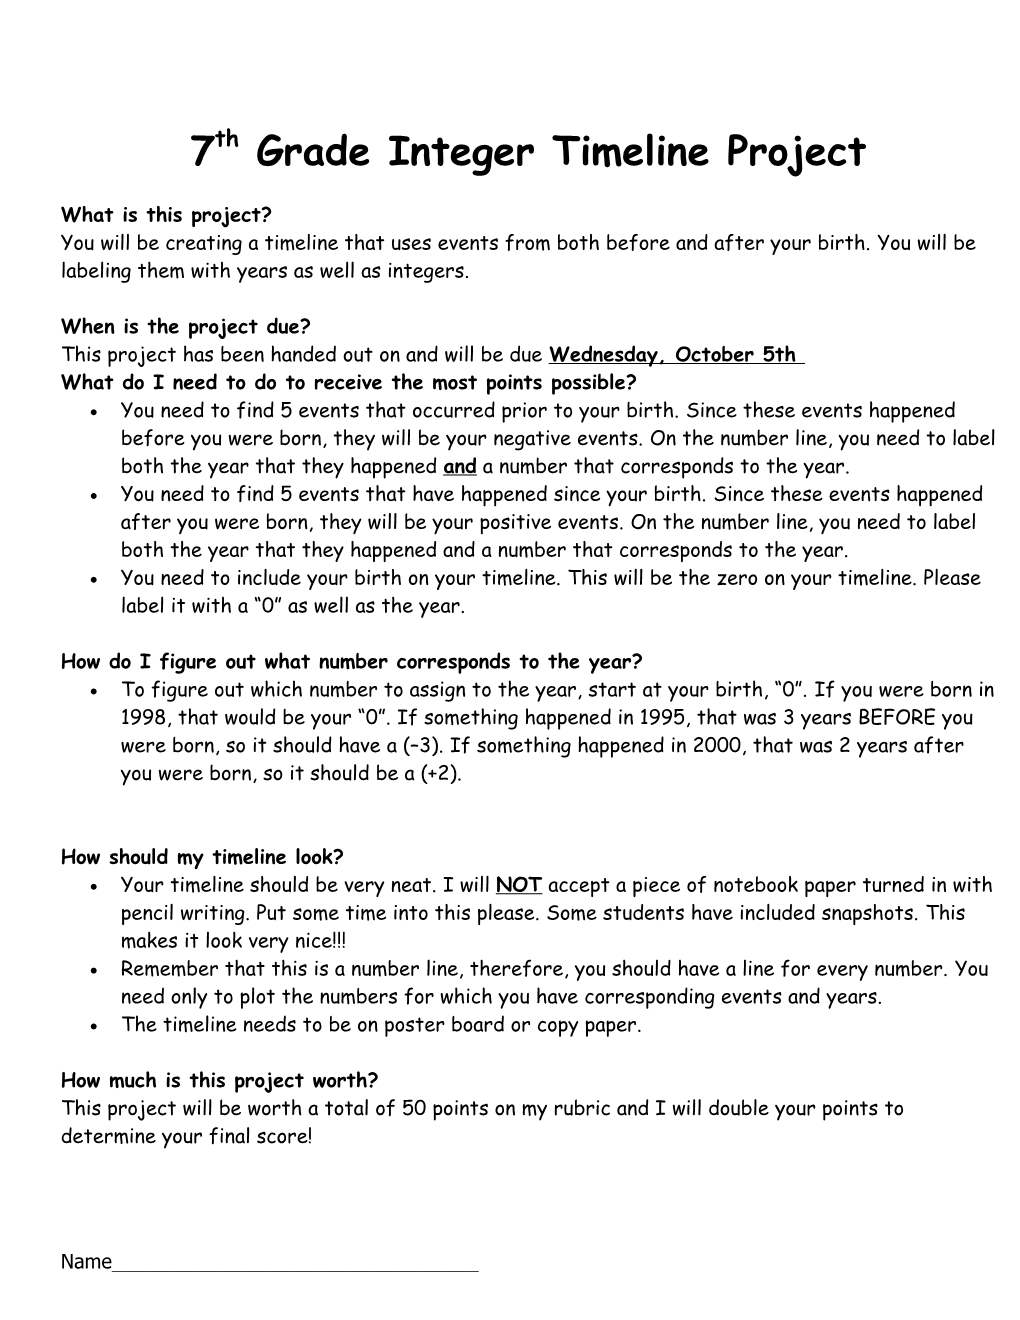 6Th Grade Integer Timeline Project s1